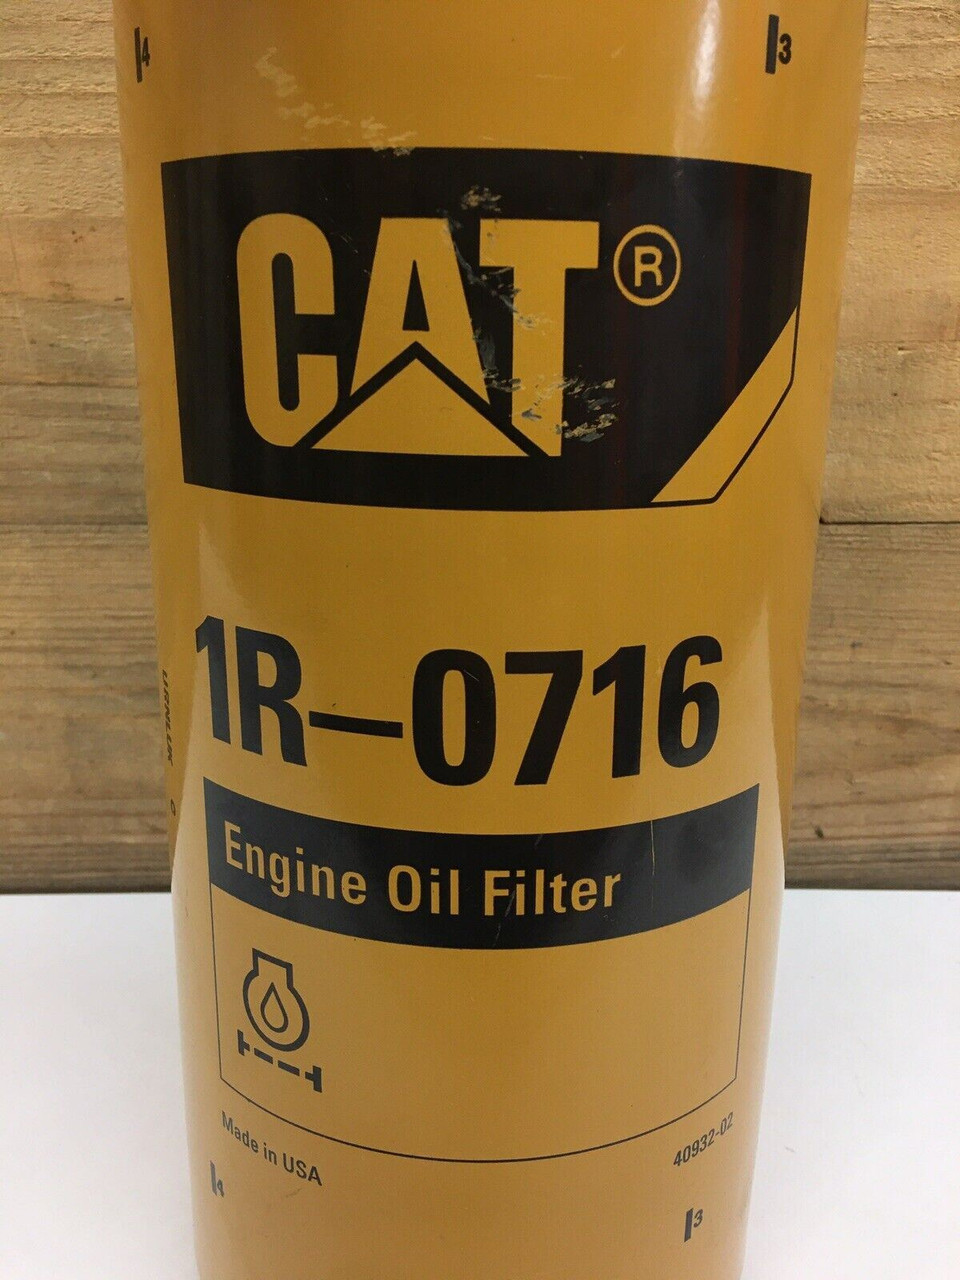 CAT Engine Oil Filter 1R-0716 Caterpillar